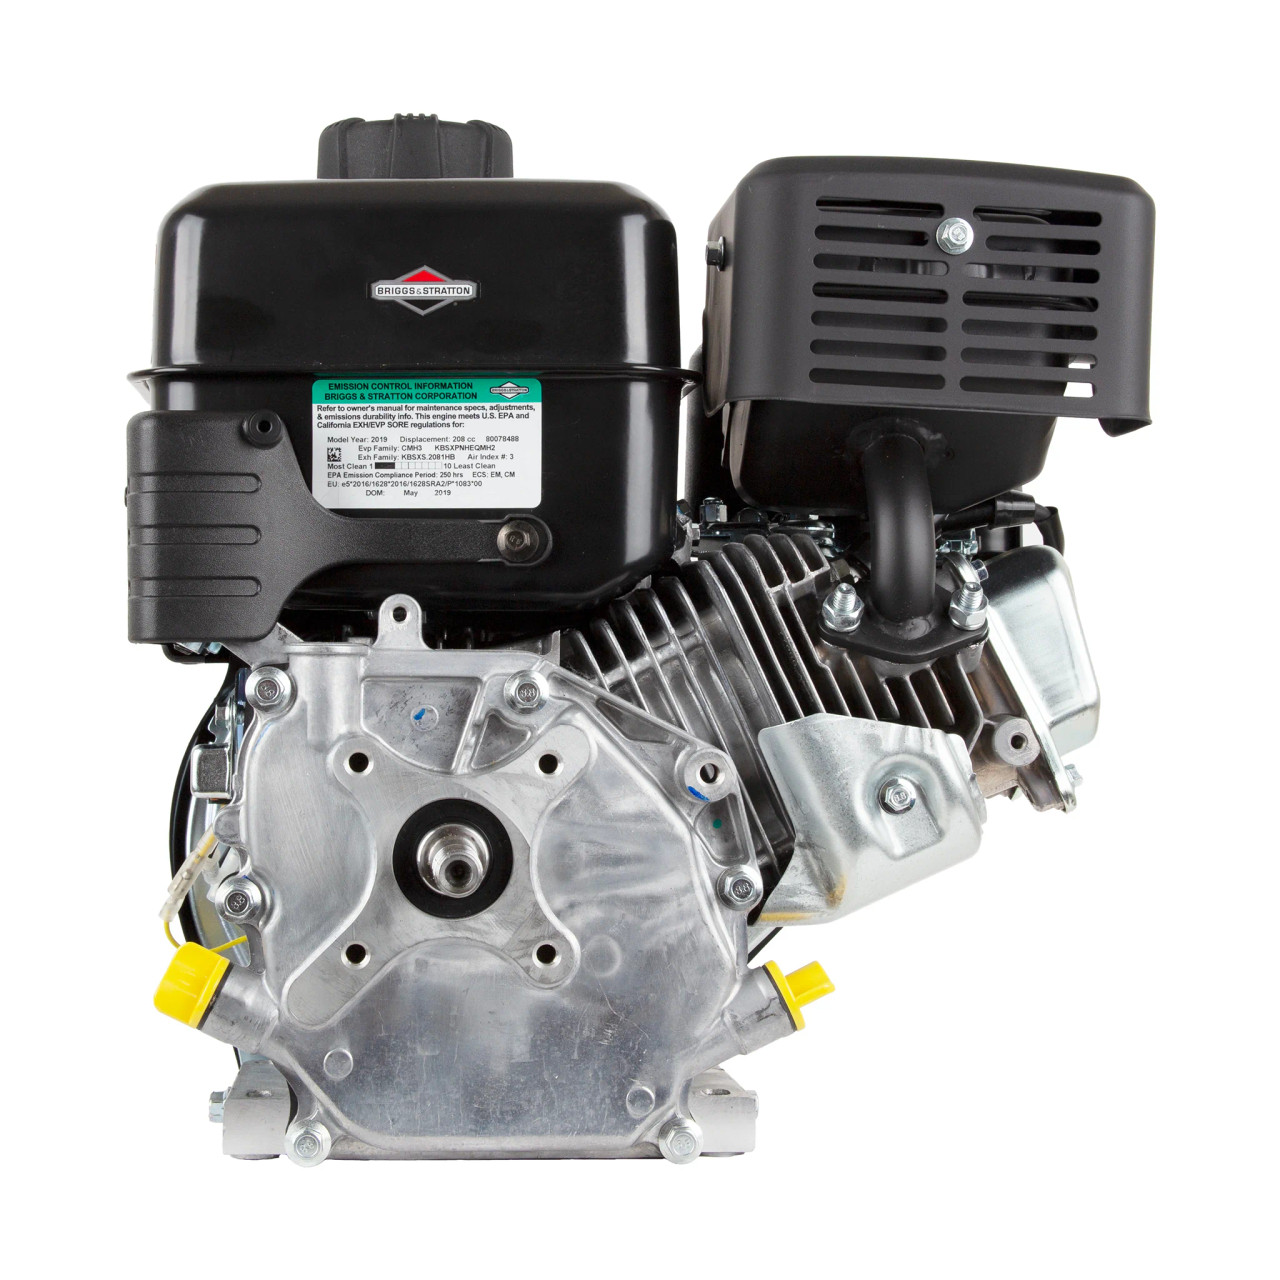 XR Series 6.5 HP 208cc Horizontal Shaft Engine 130G32-0244-F1